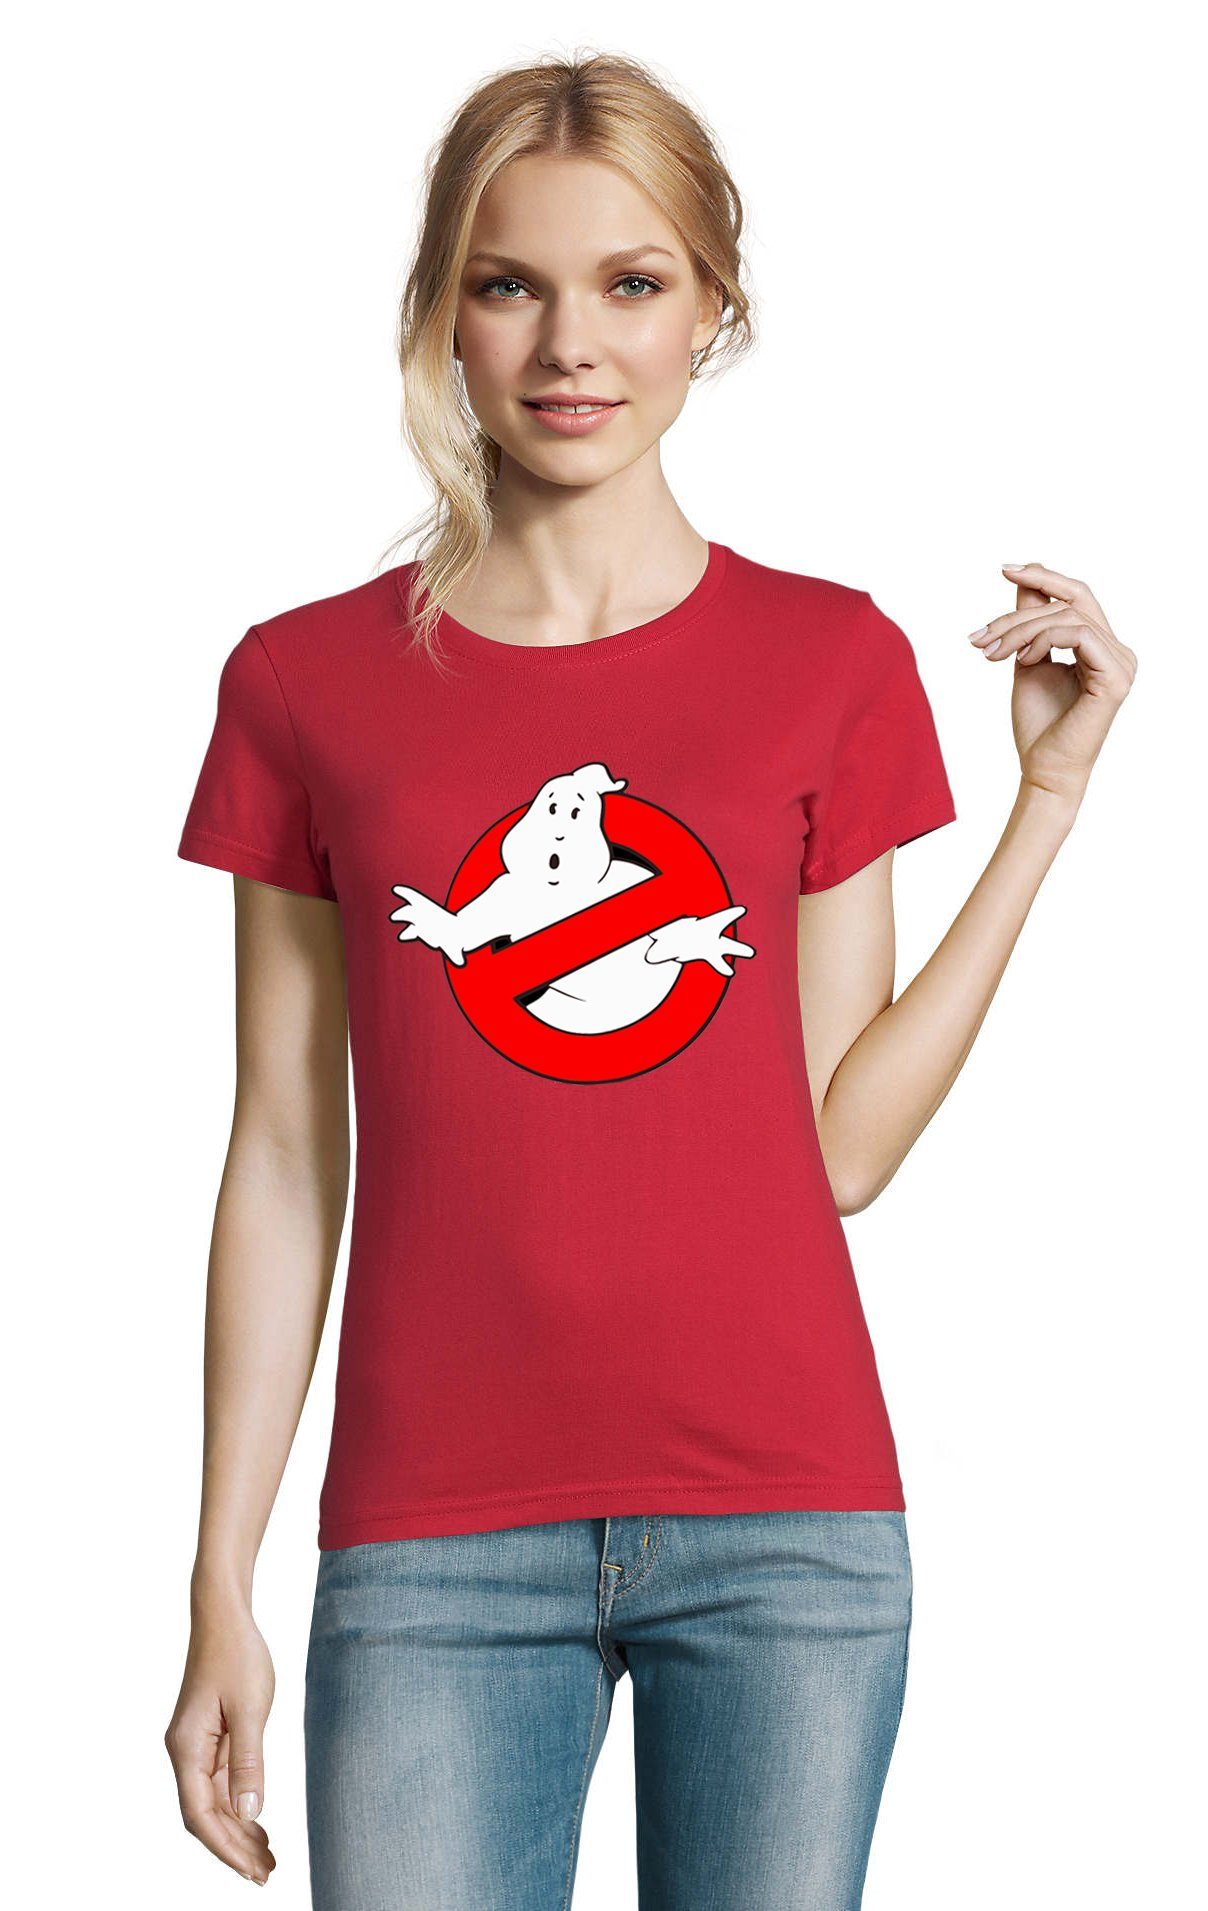 Blondie & Brownie T-Shirt Damen Ghostbusters Ghost Geister Geisterjäger